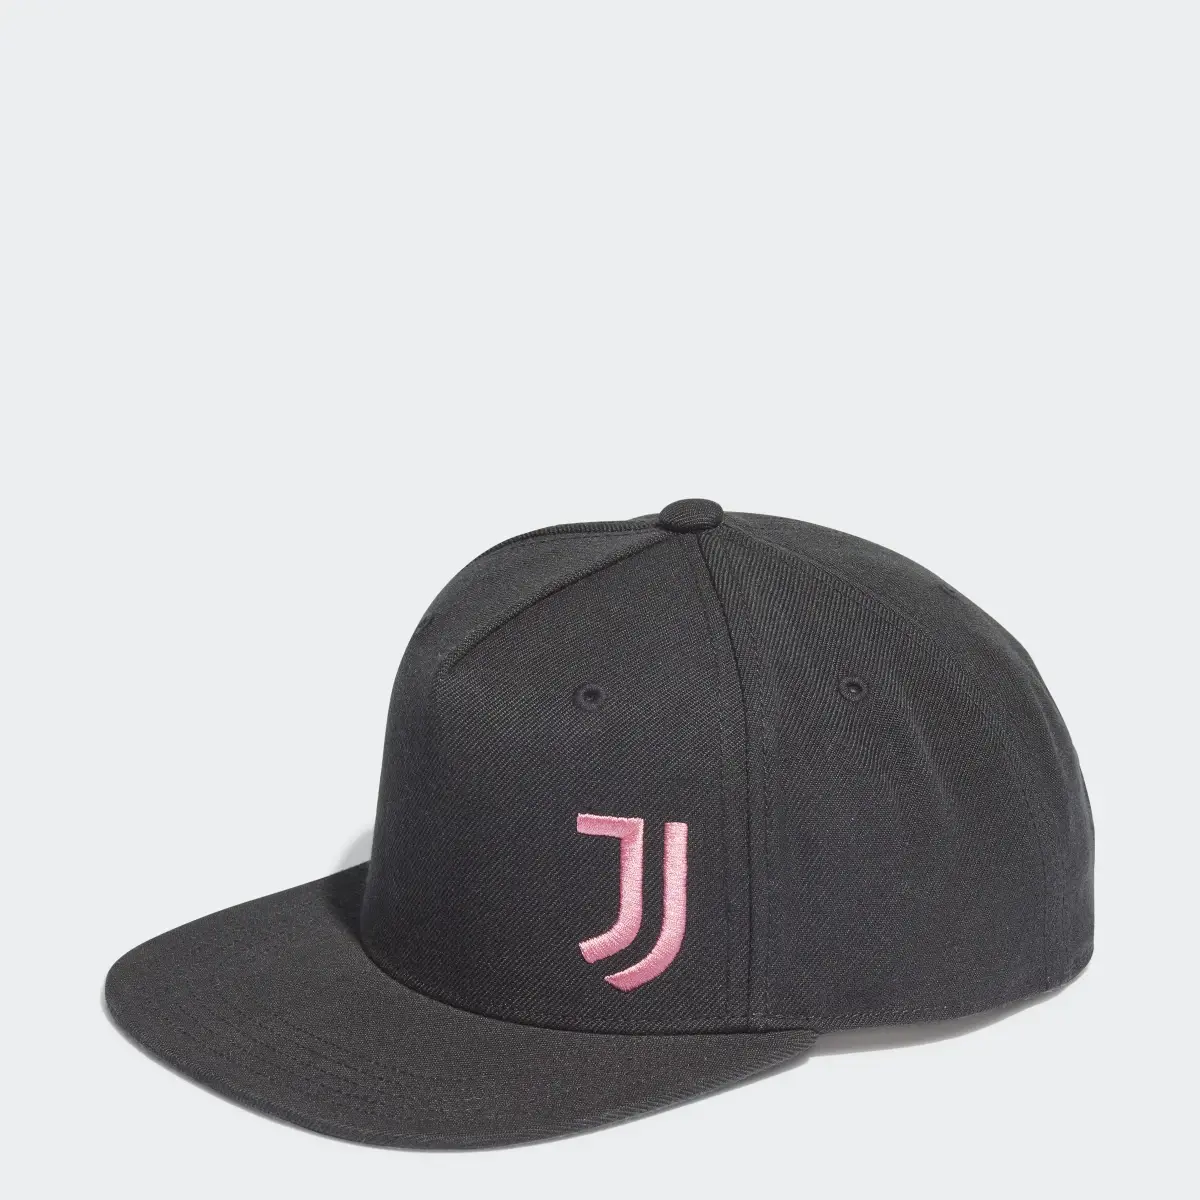 Adidas Juventus Snapback Cap. 1